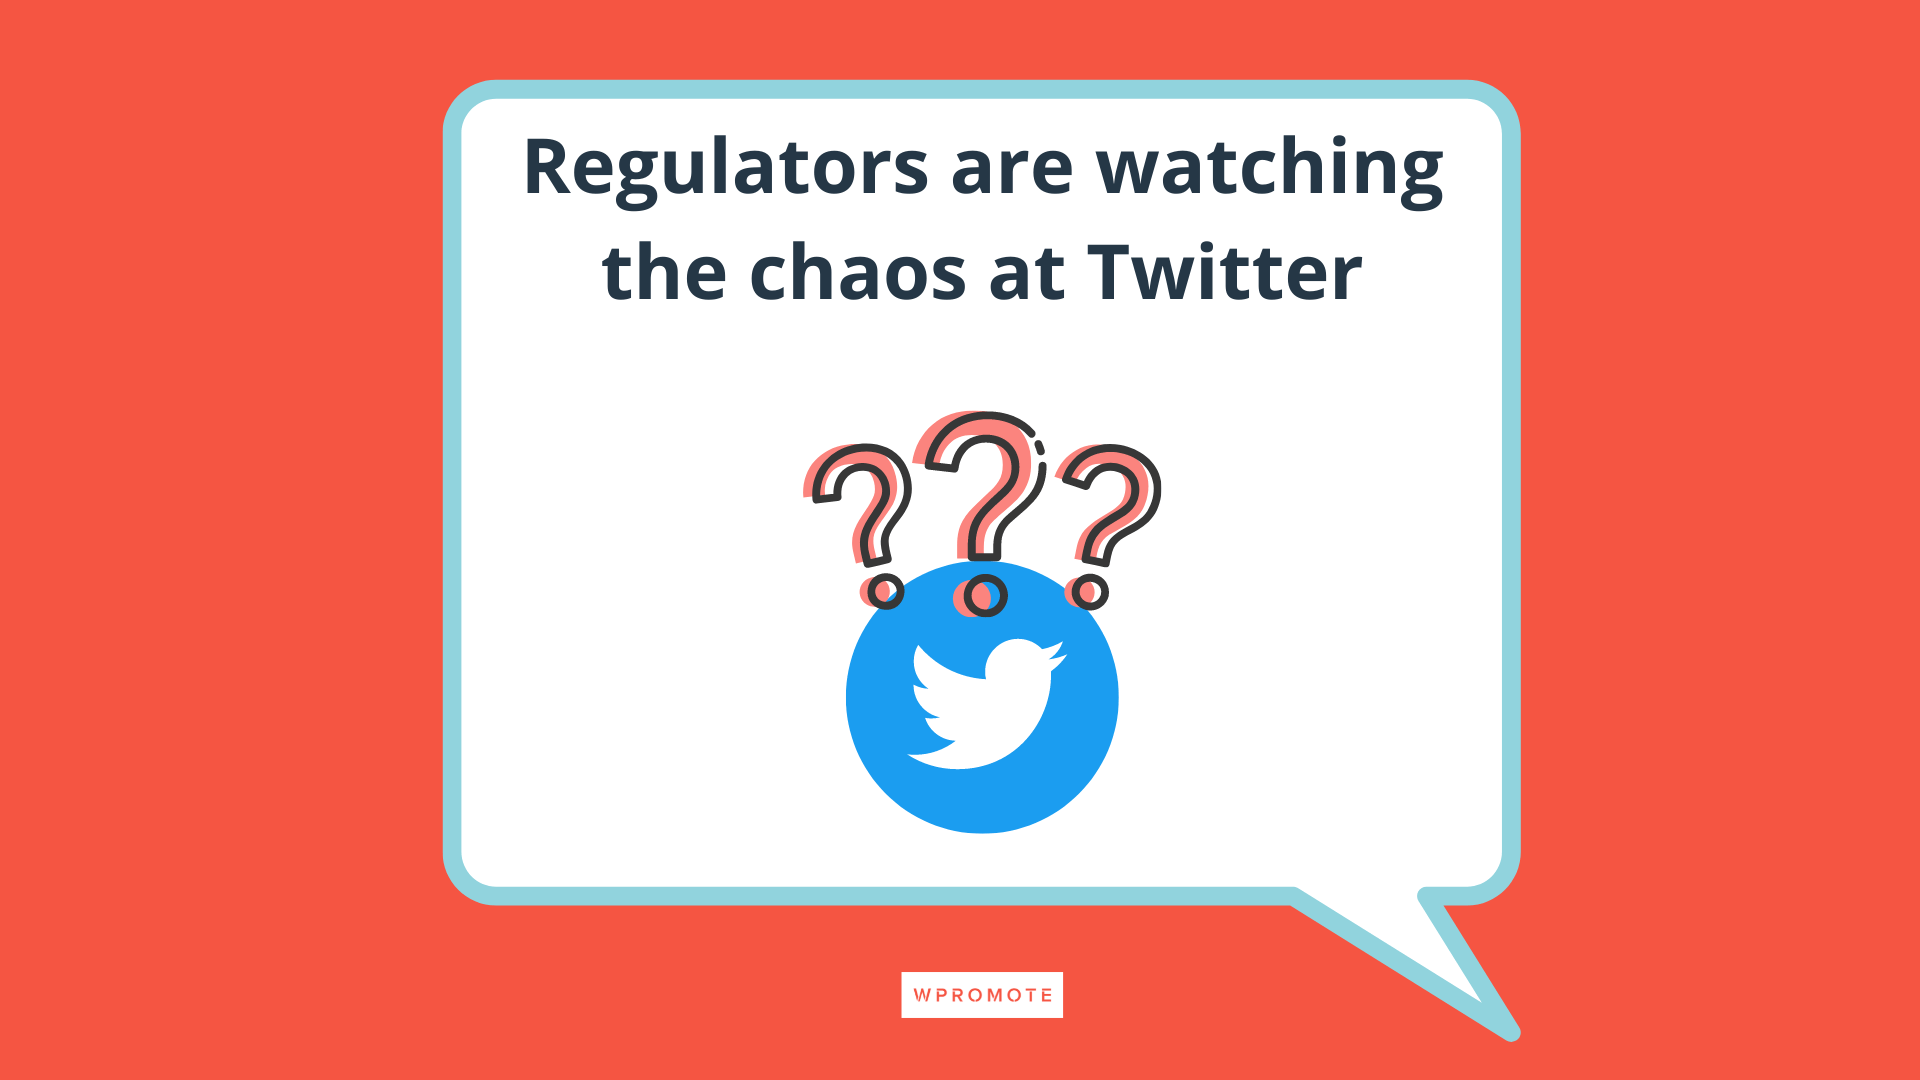 EU regulators are watching the chaos at Twitter